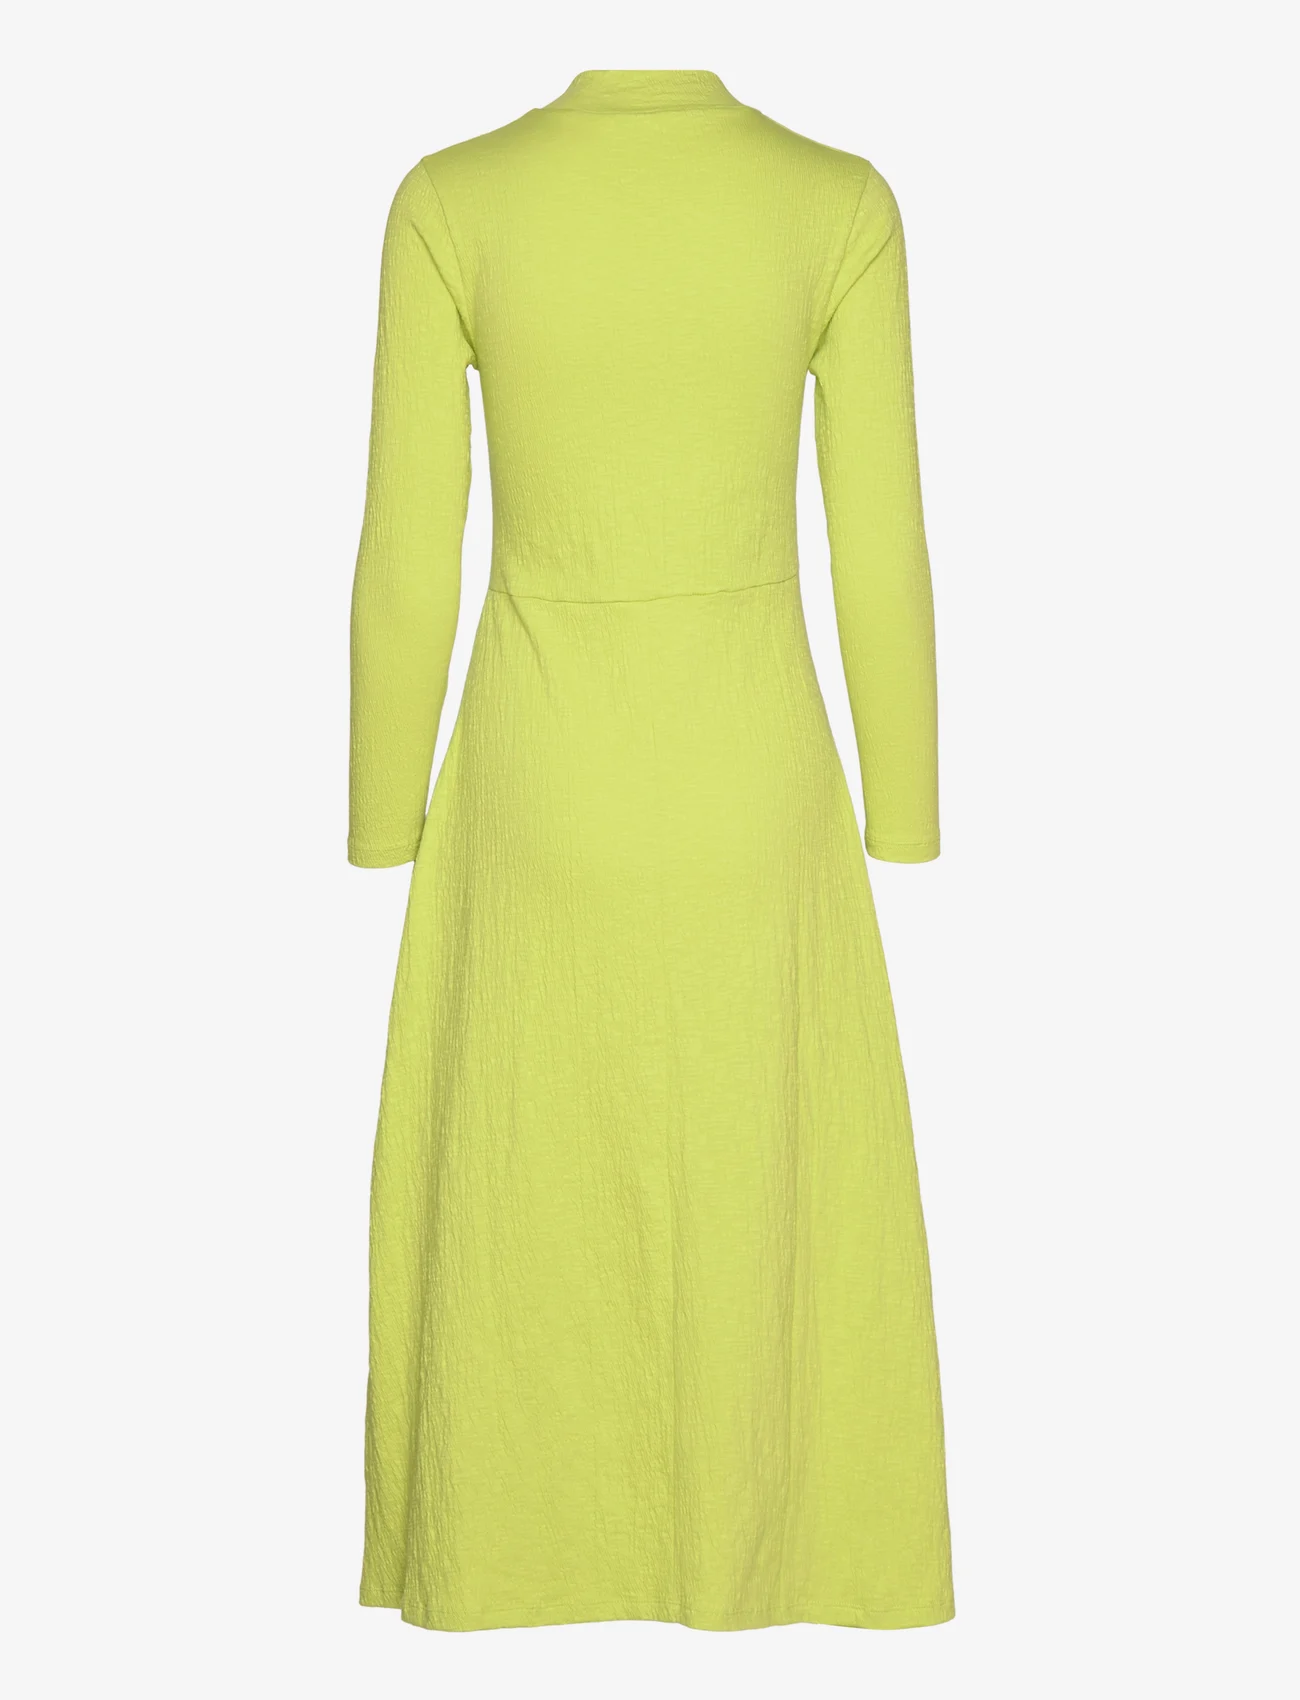 Karen By Simonsen - HilaryKB Dress - sukienki koszulowe - bright lime green - 1